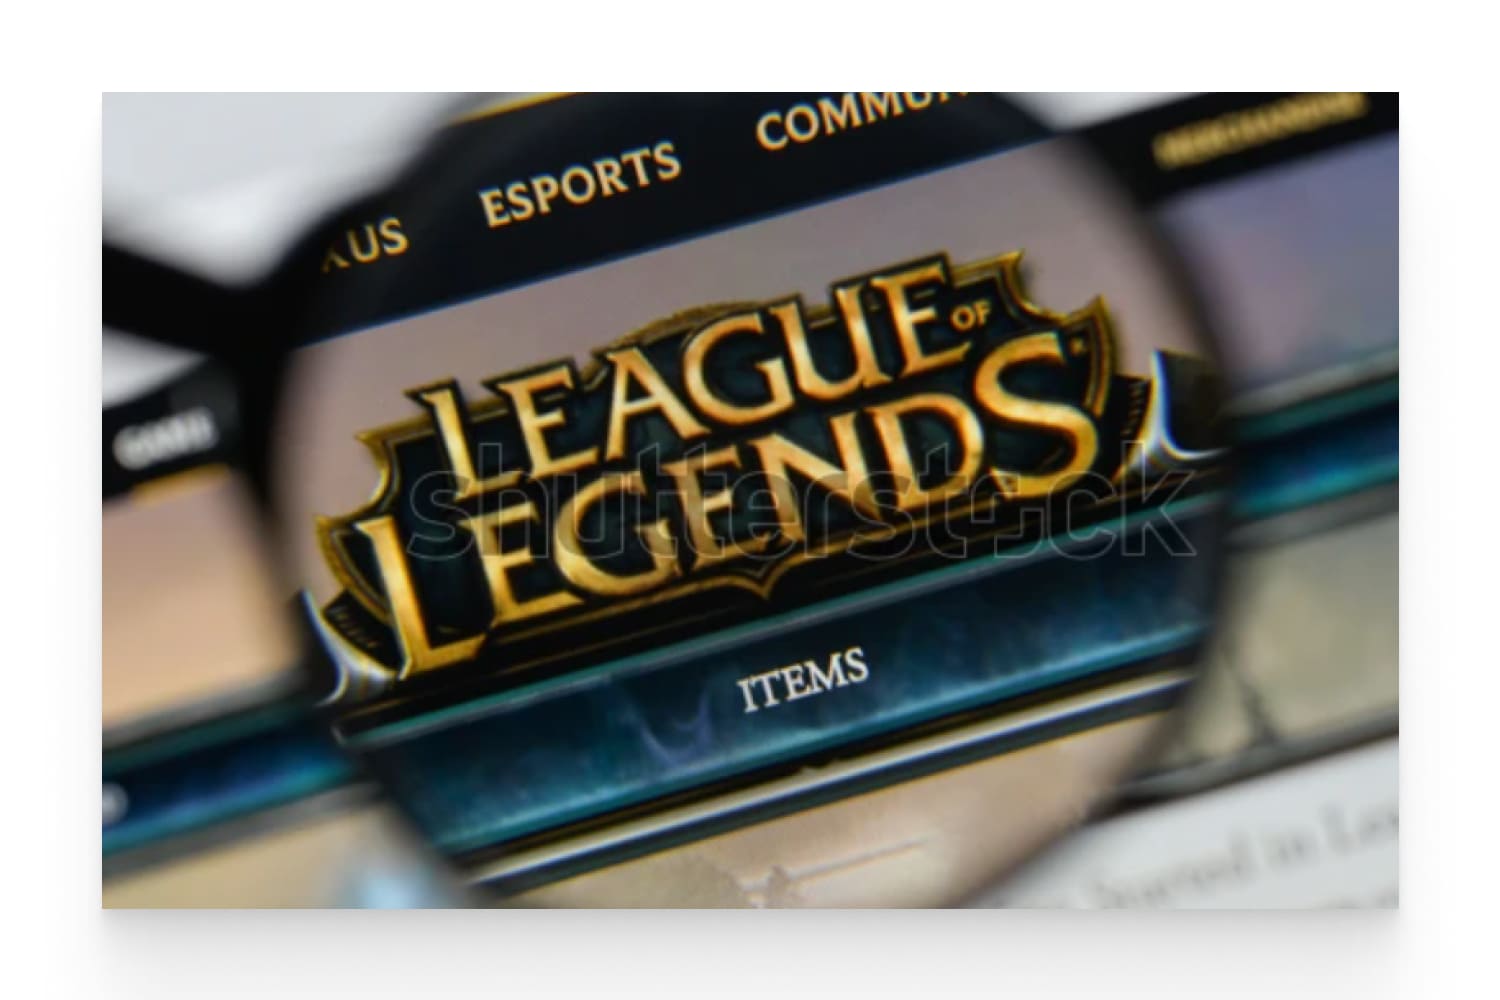 League Of Legends website homepage.